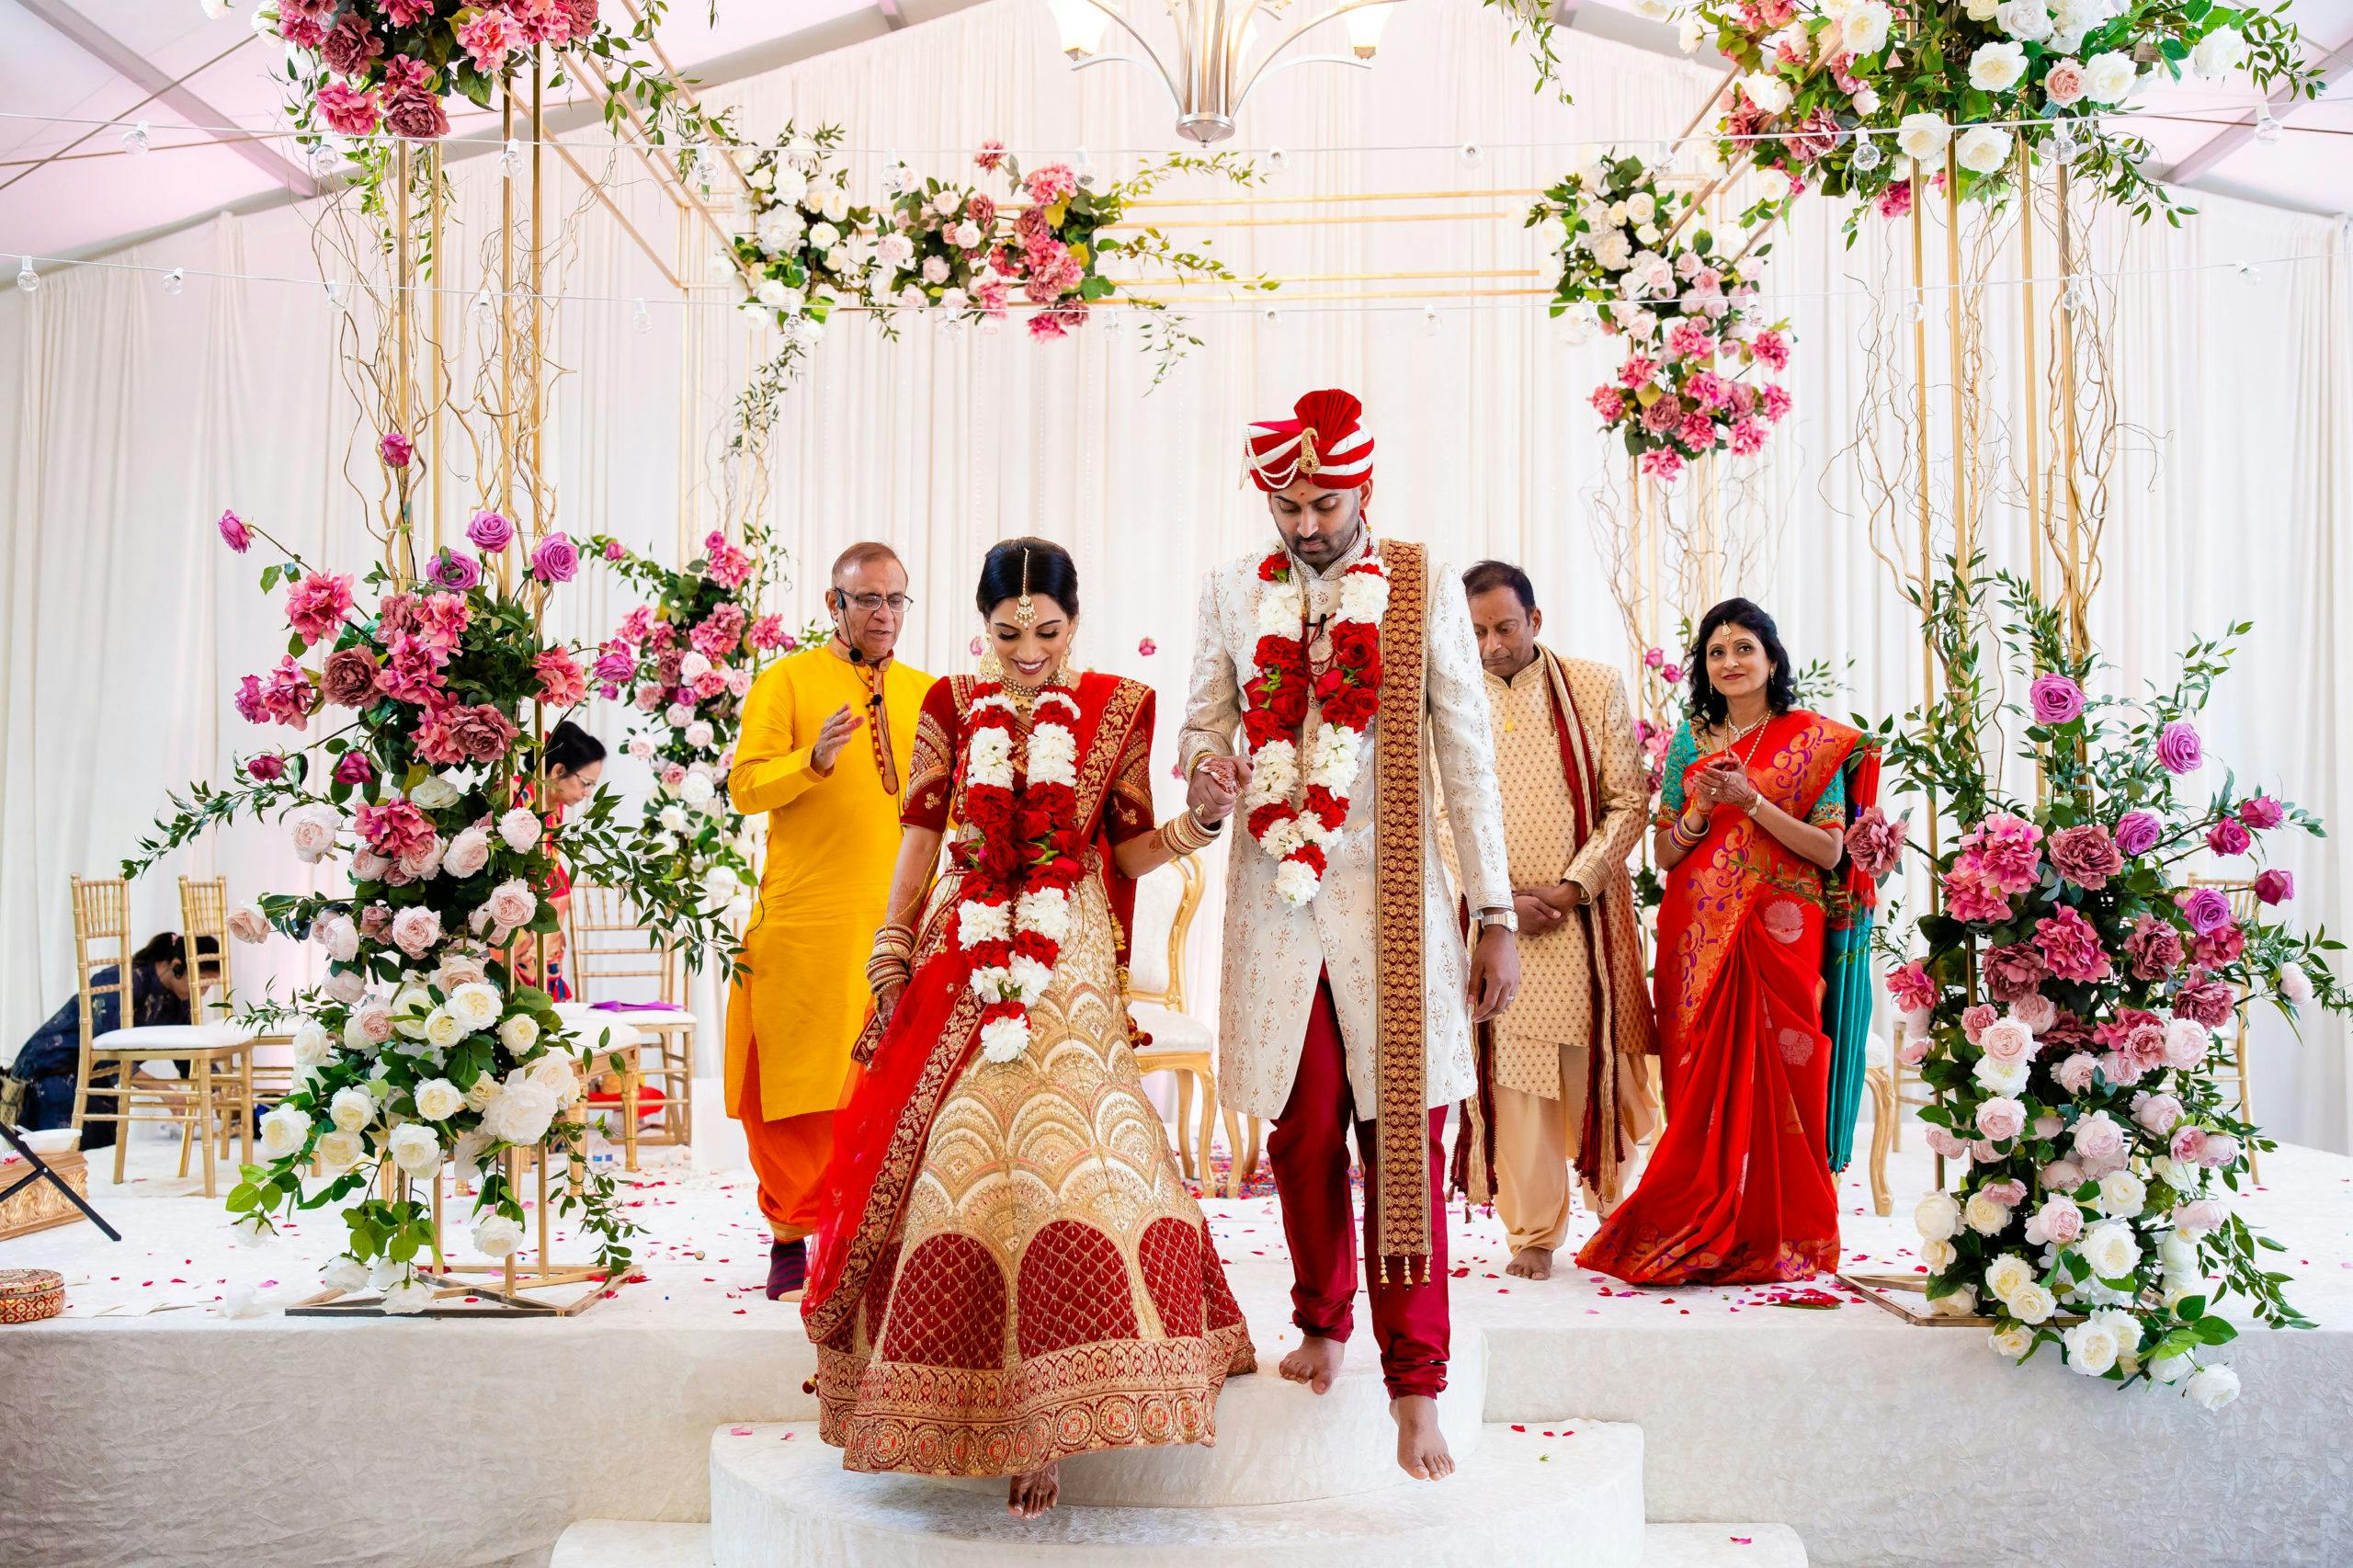 Hindu wedding decorations — design, india - Stock Photo | #205553220